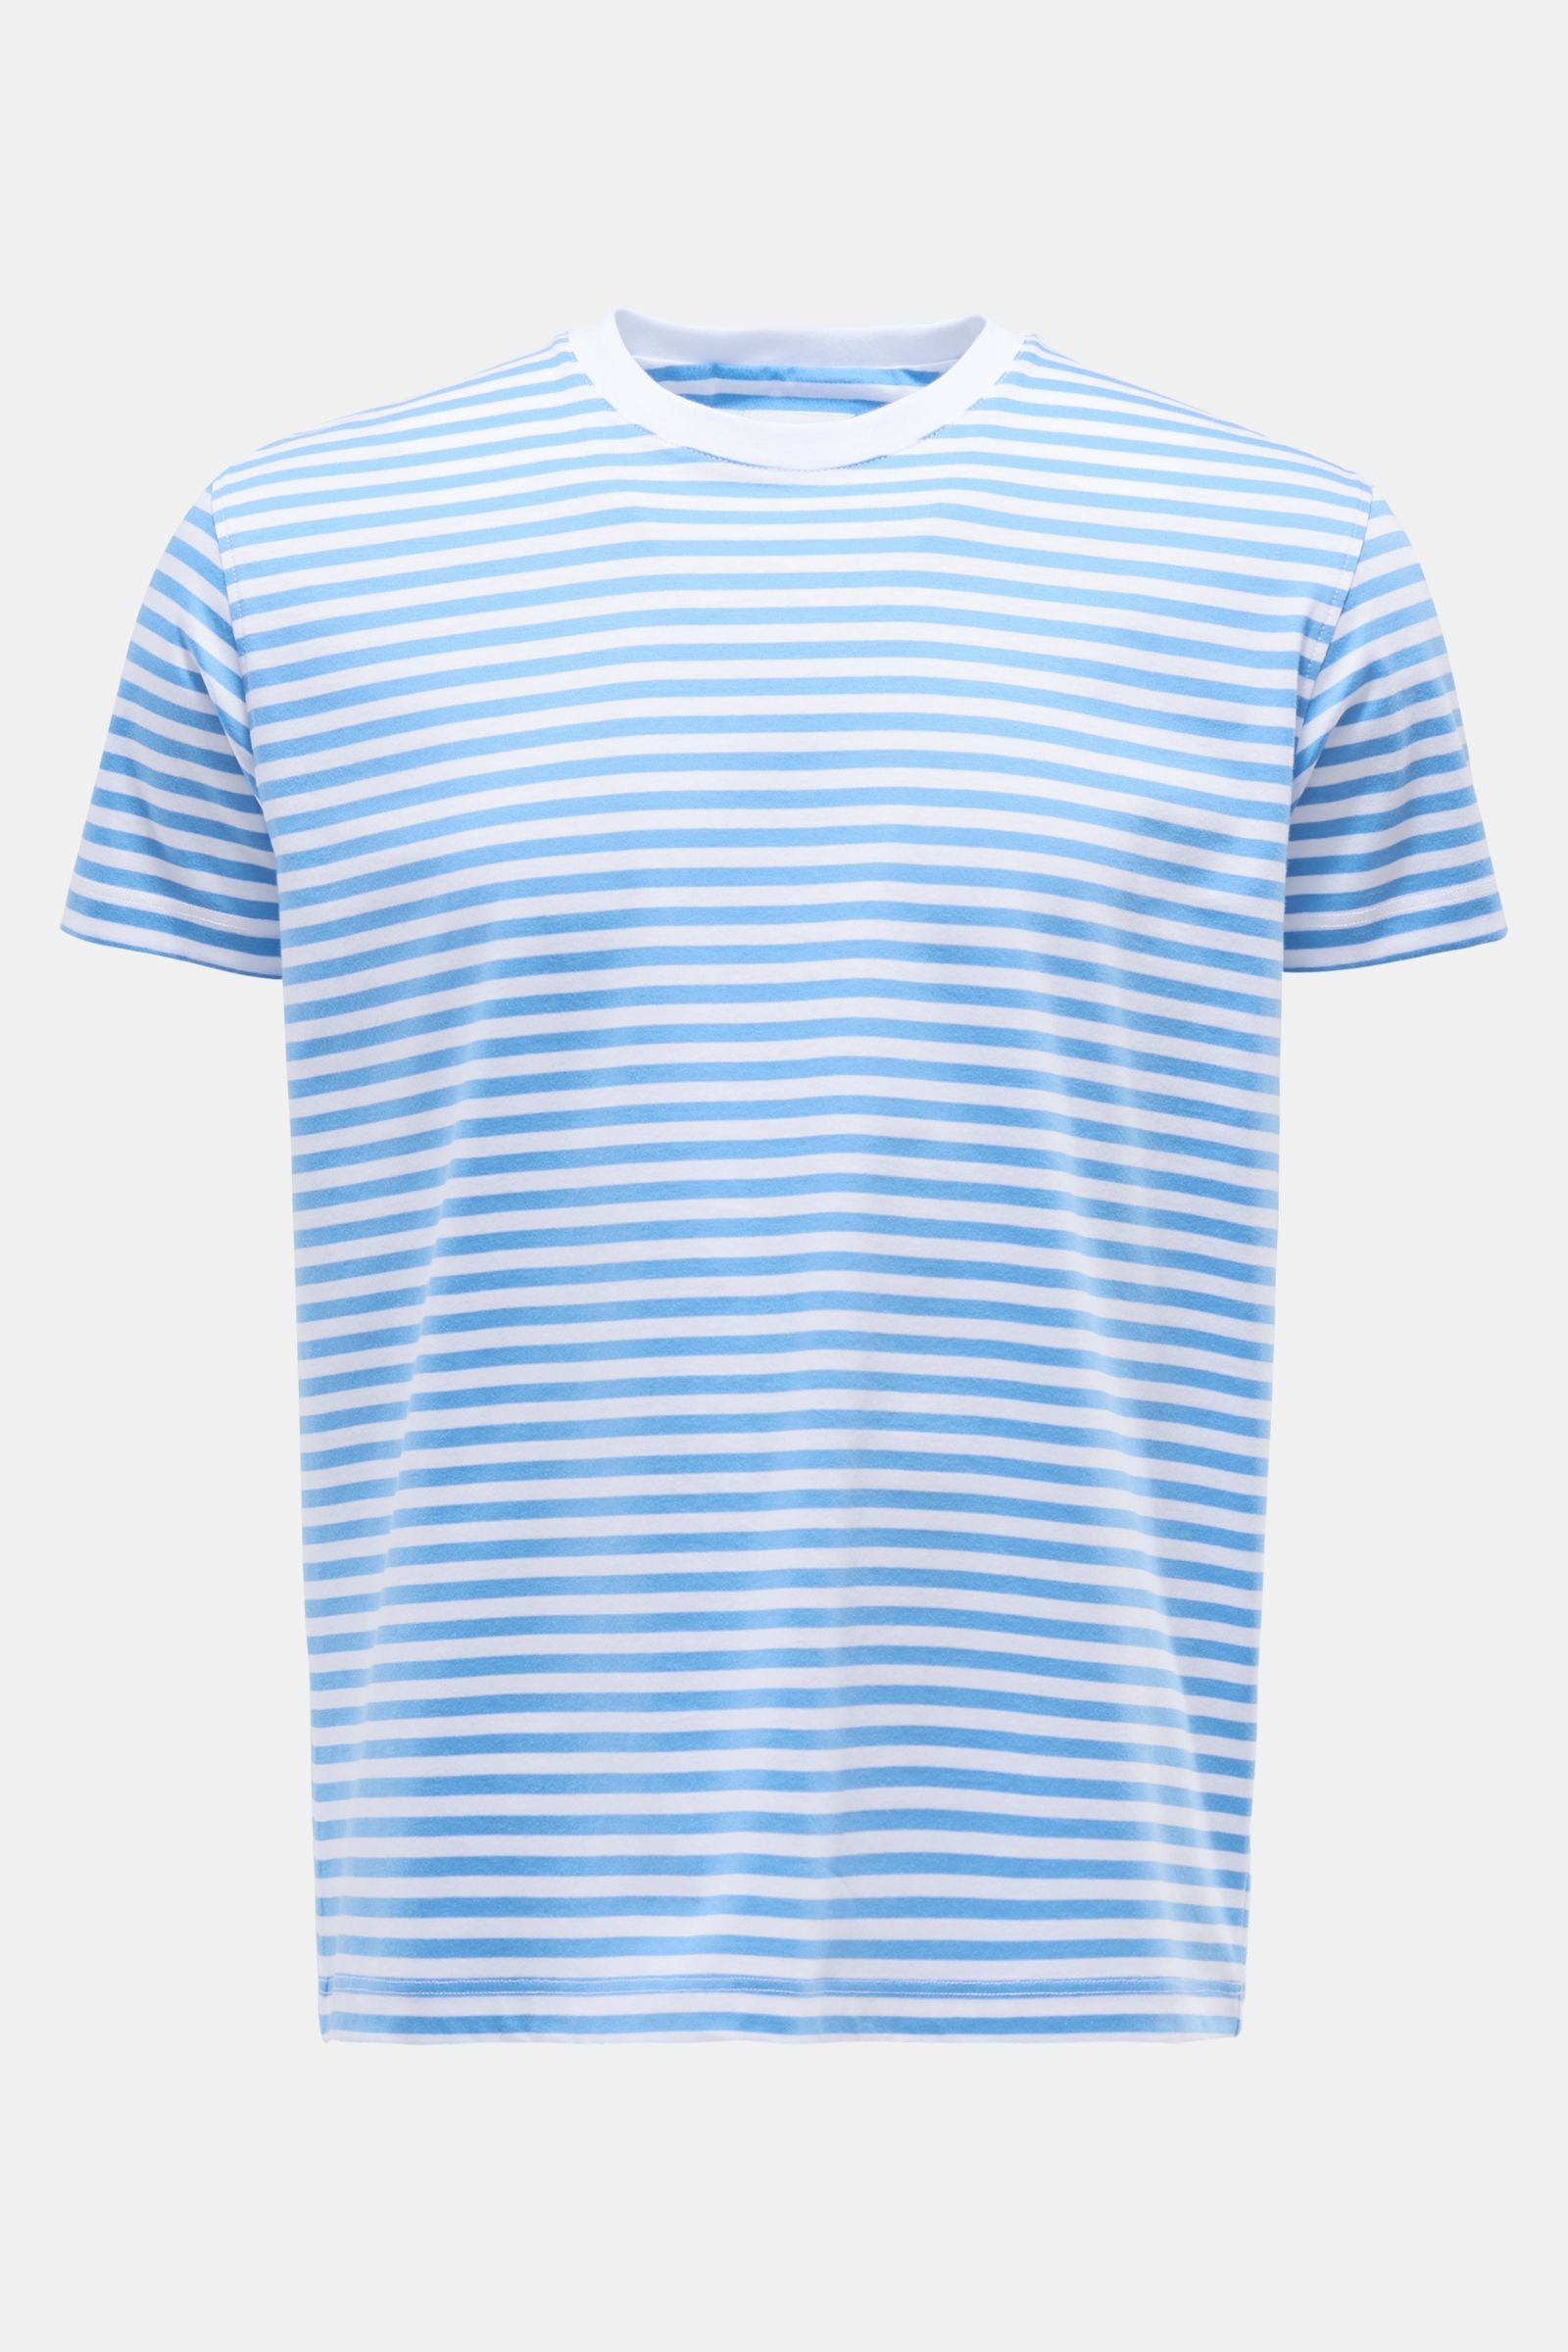 Crew neck T-shirt light blue/white striped